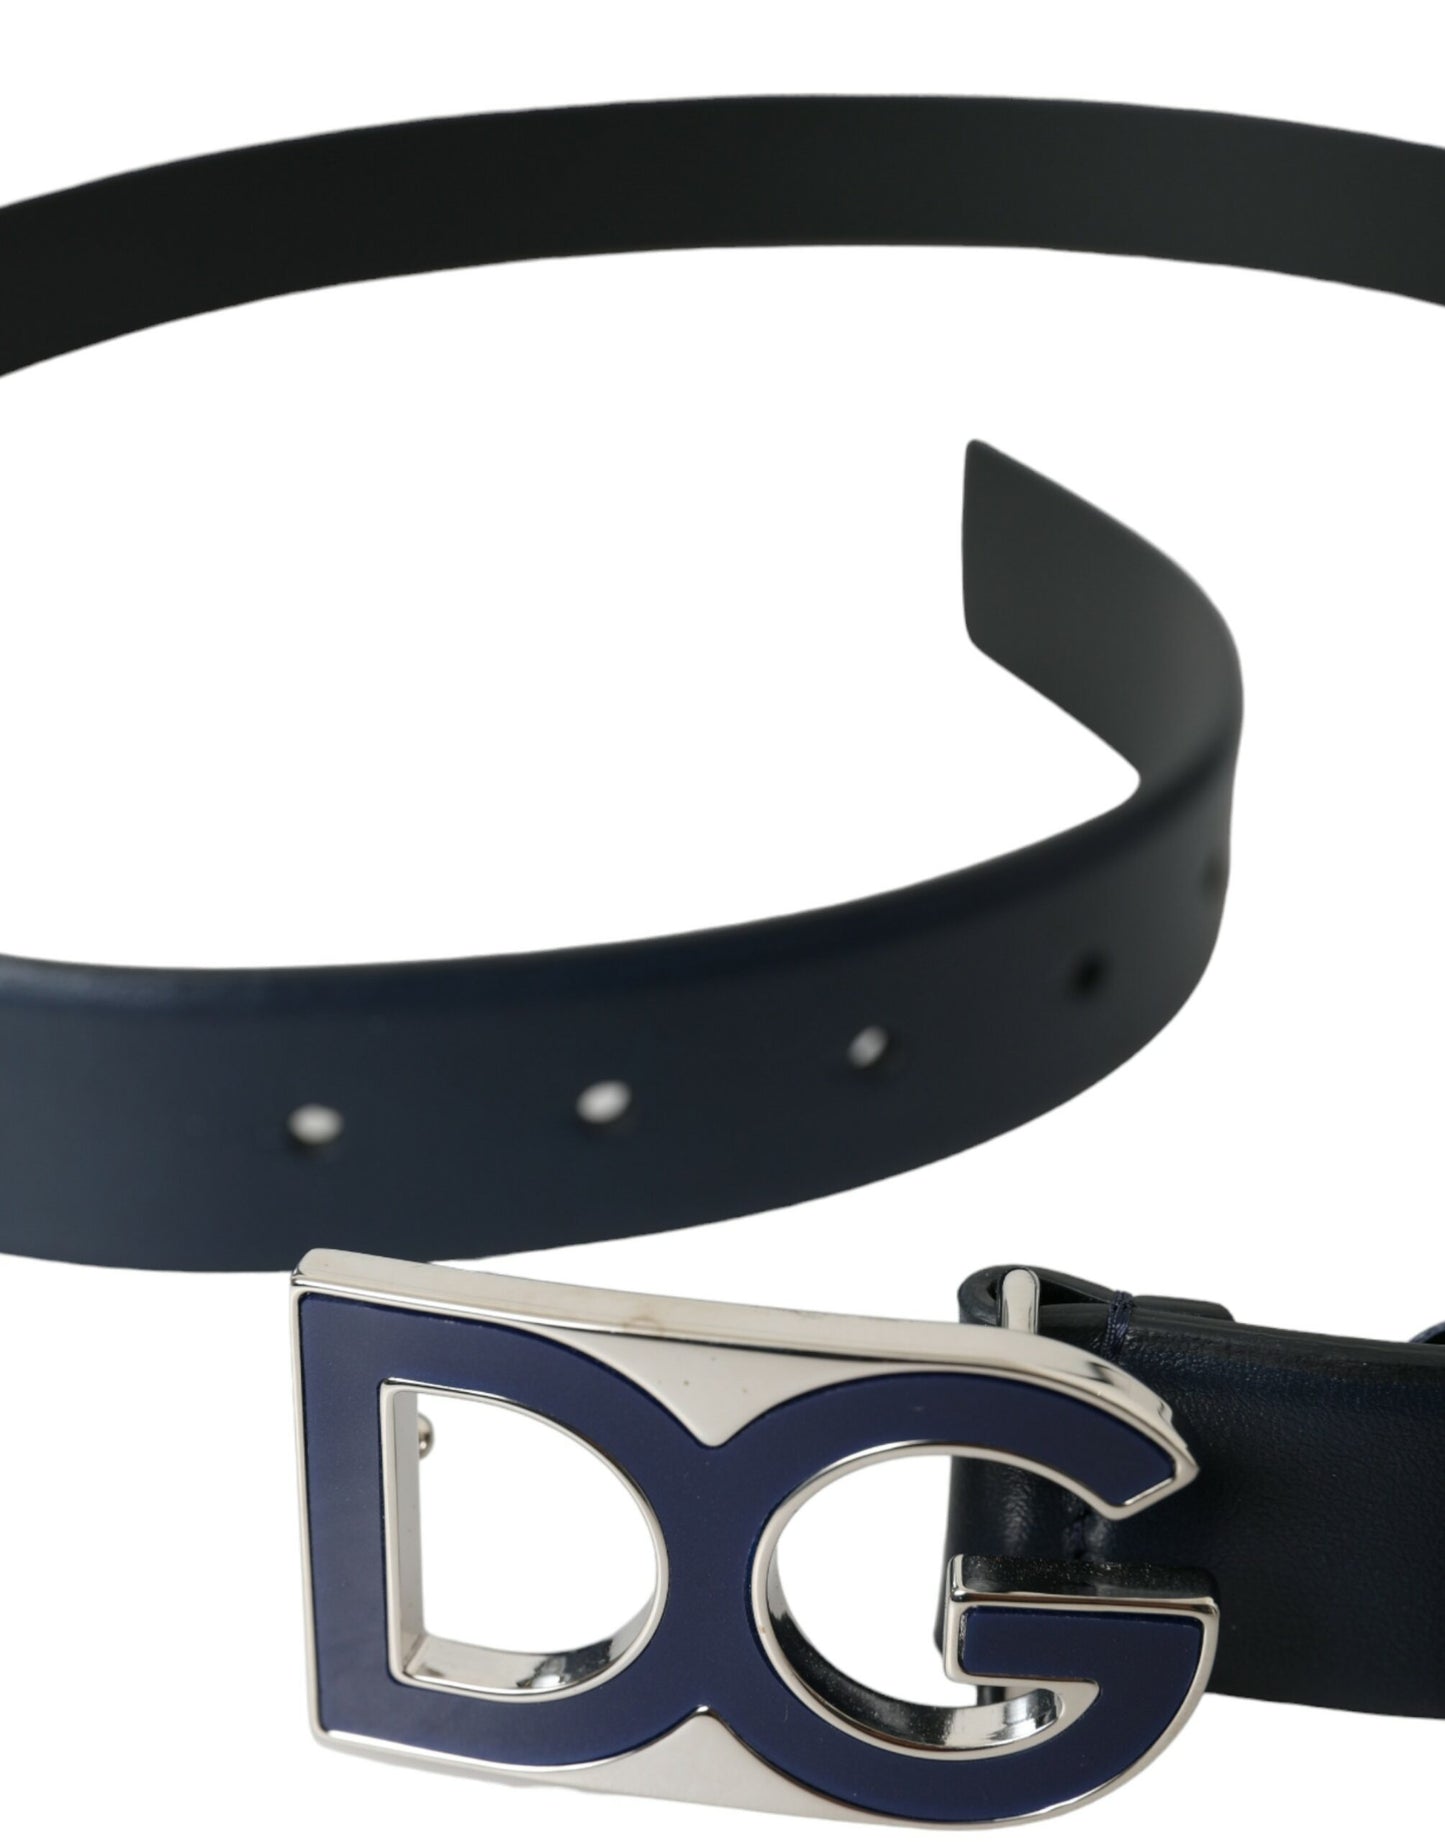 Fashionsarah.com Fashionsarah.com Dolce & Gabbana Blue Leather Metal Logo Buckle Belt Men